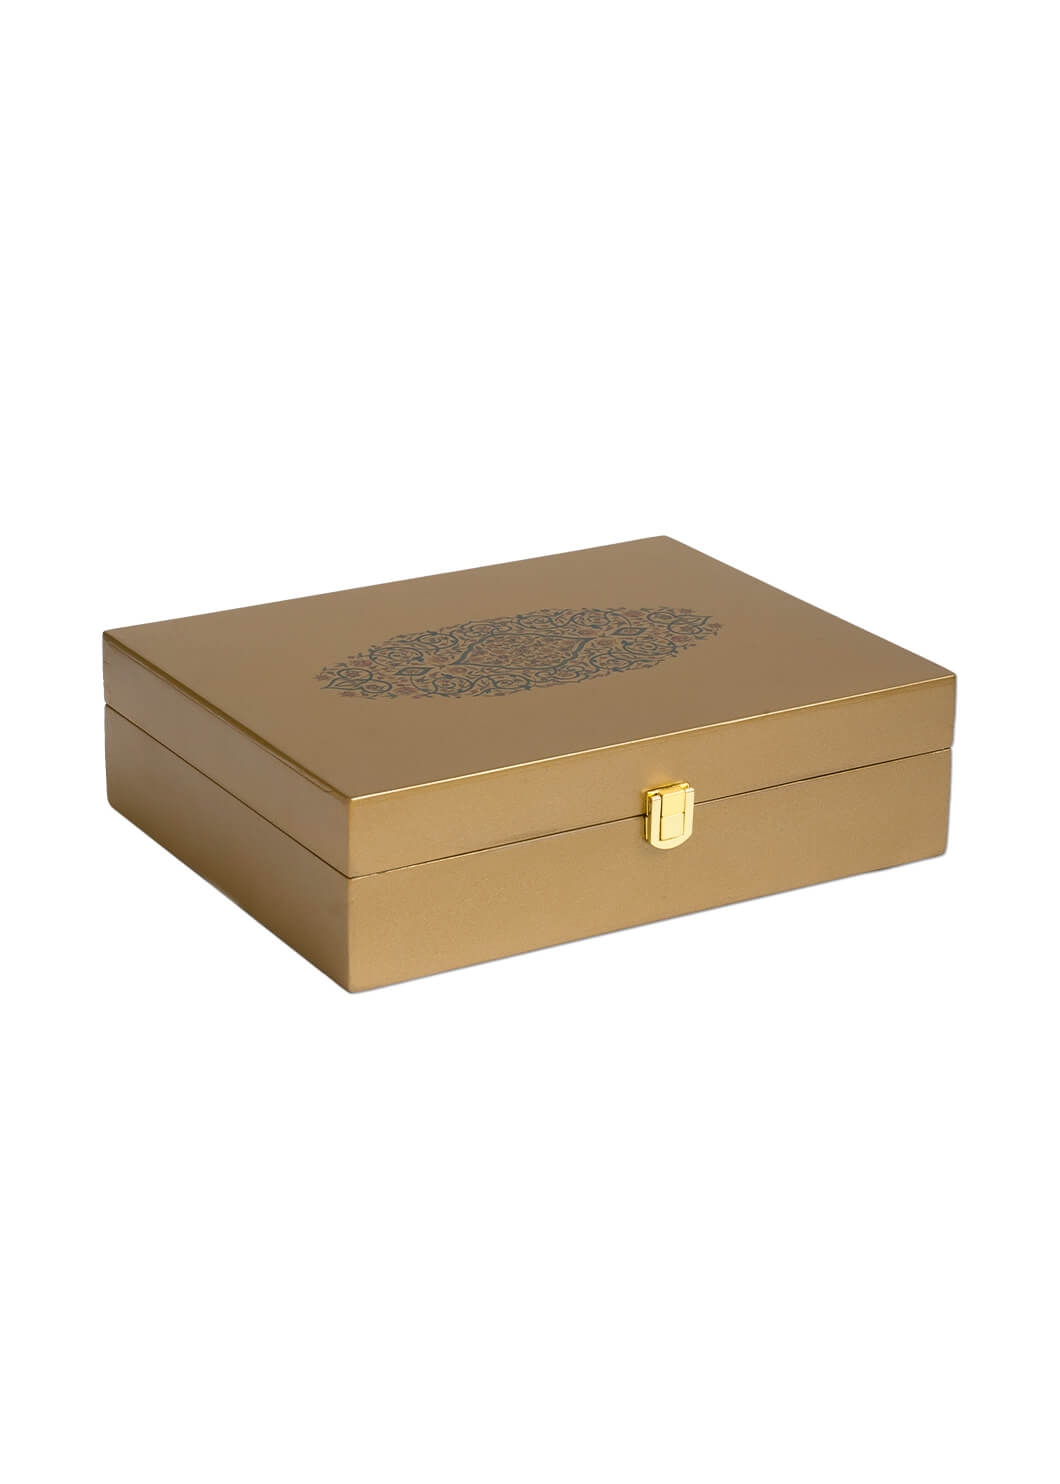 Empyreal Wooden Box - Customized Design